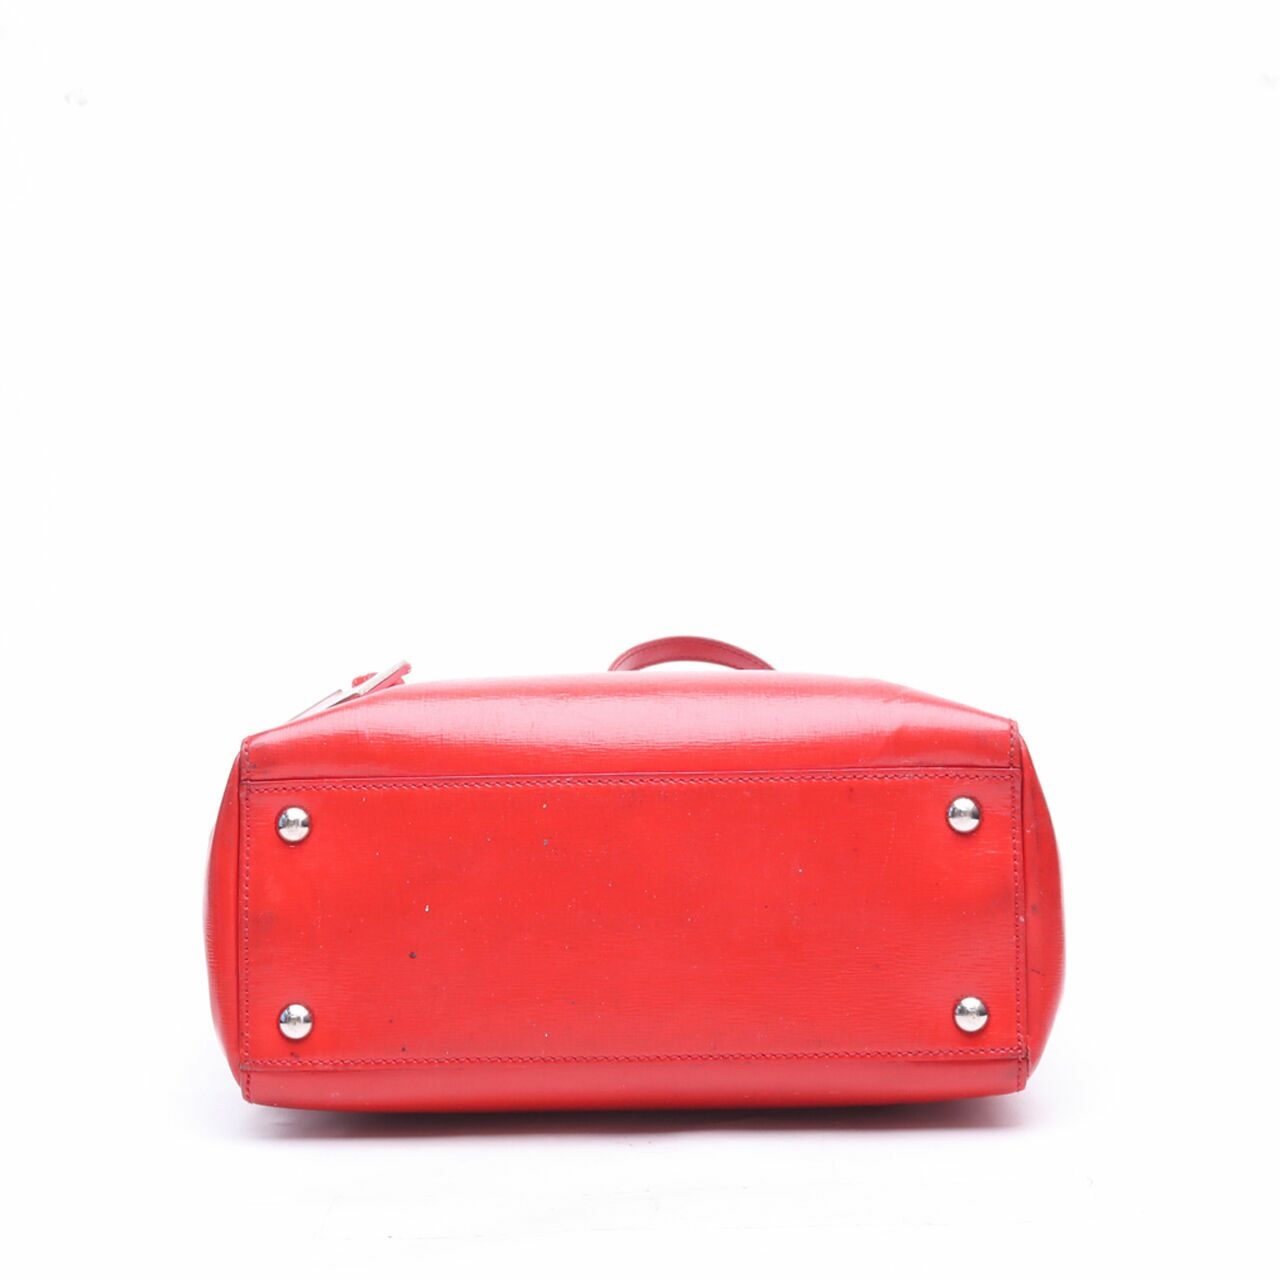 Fendi 2Jours Leather Red Satchel Bag 